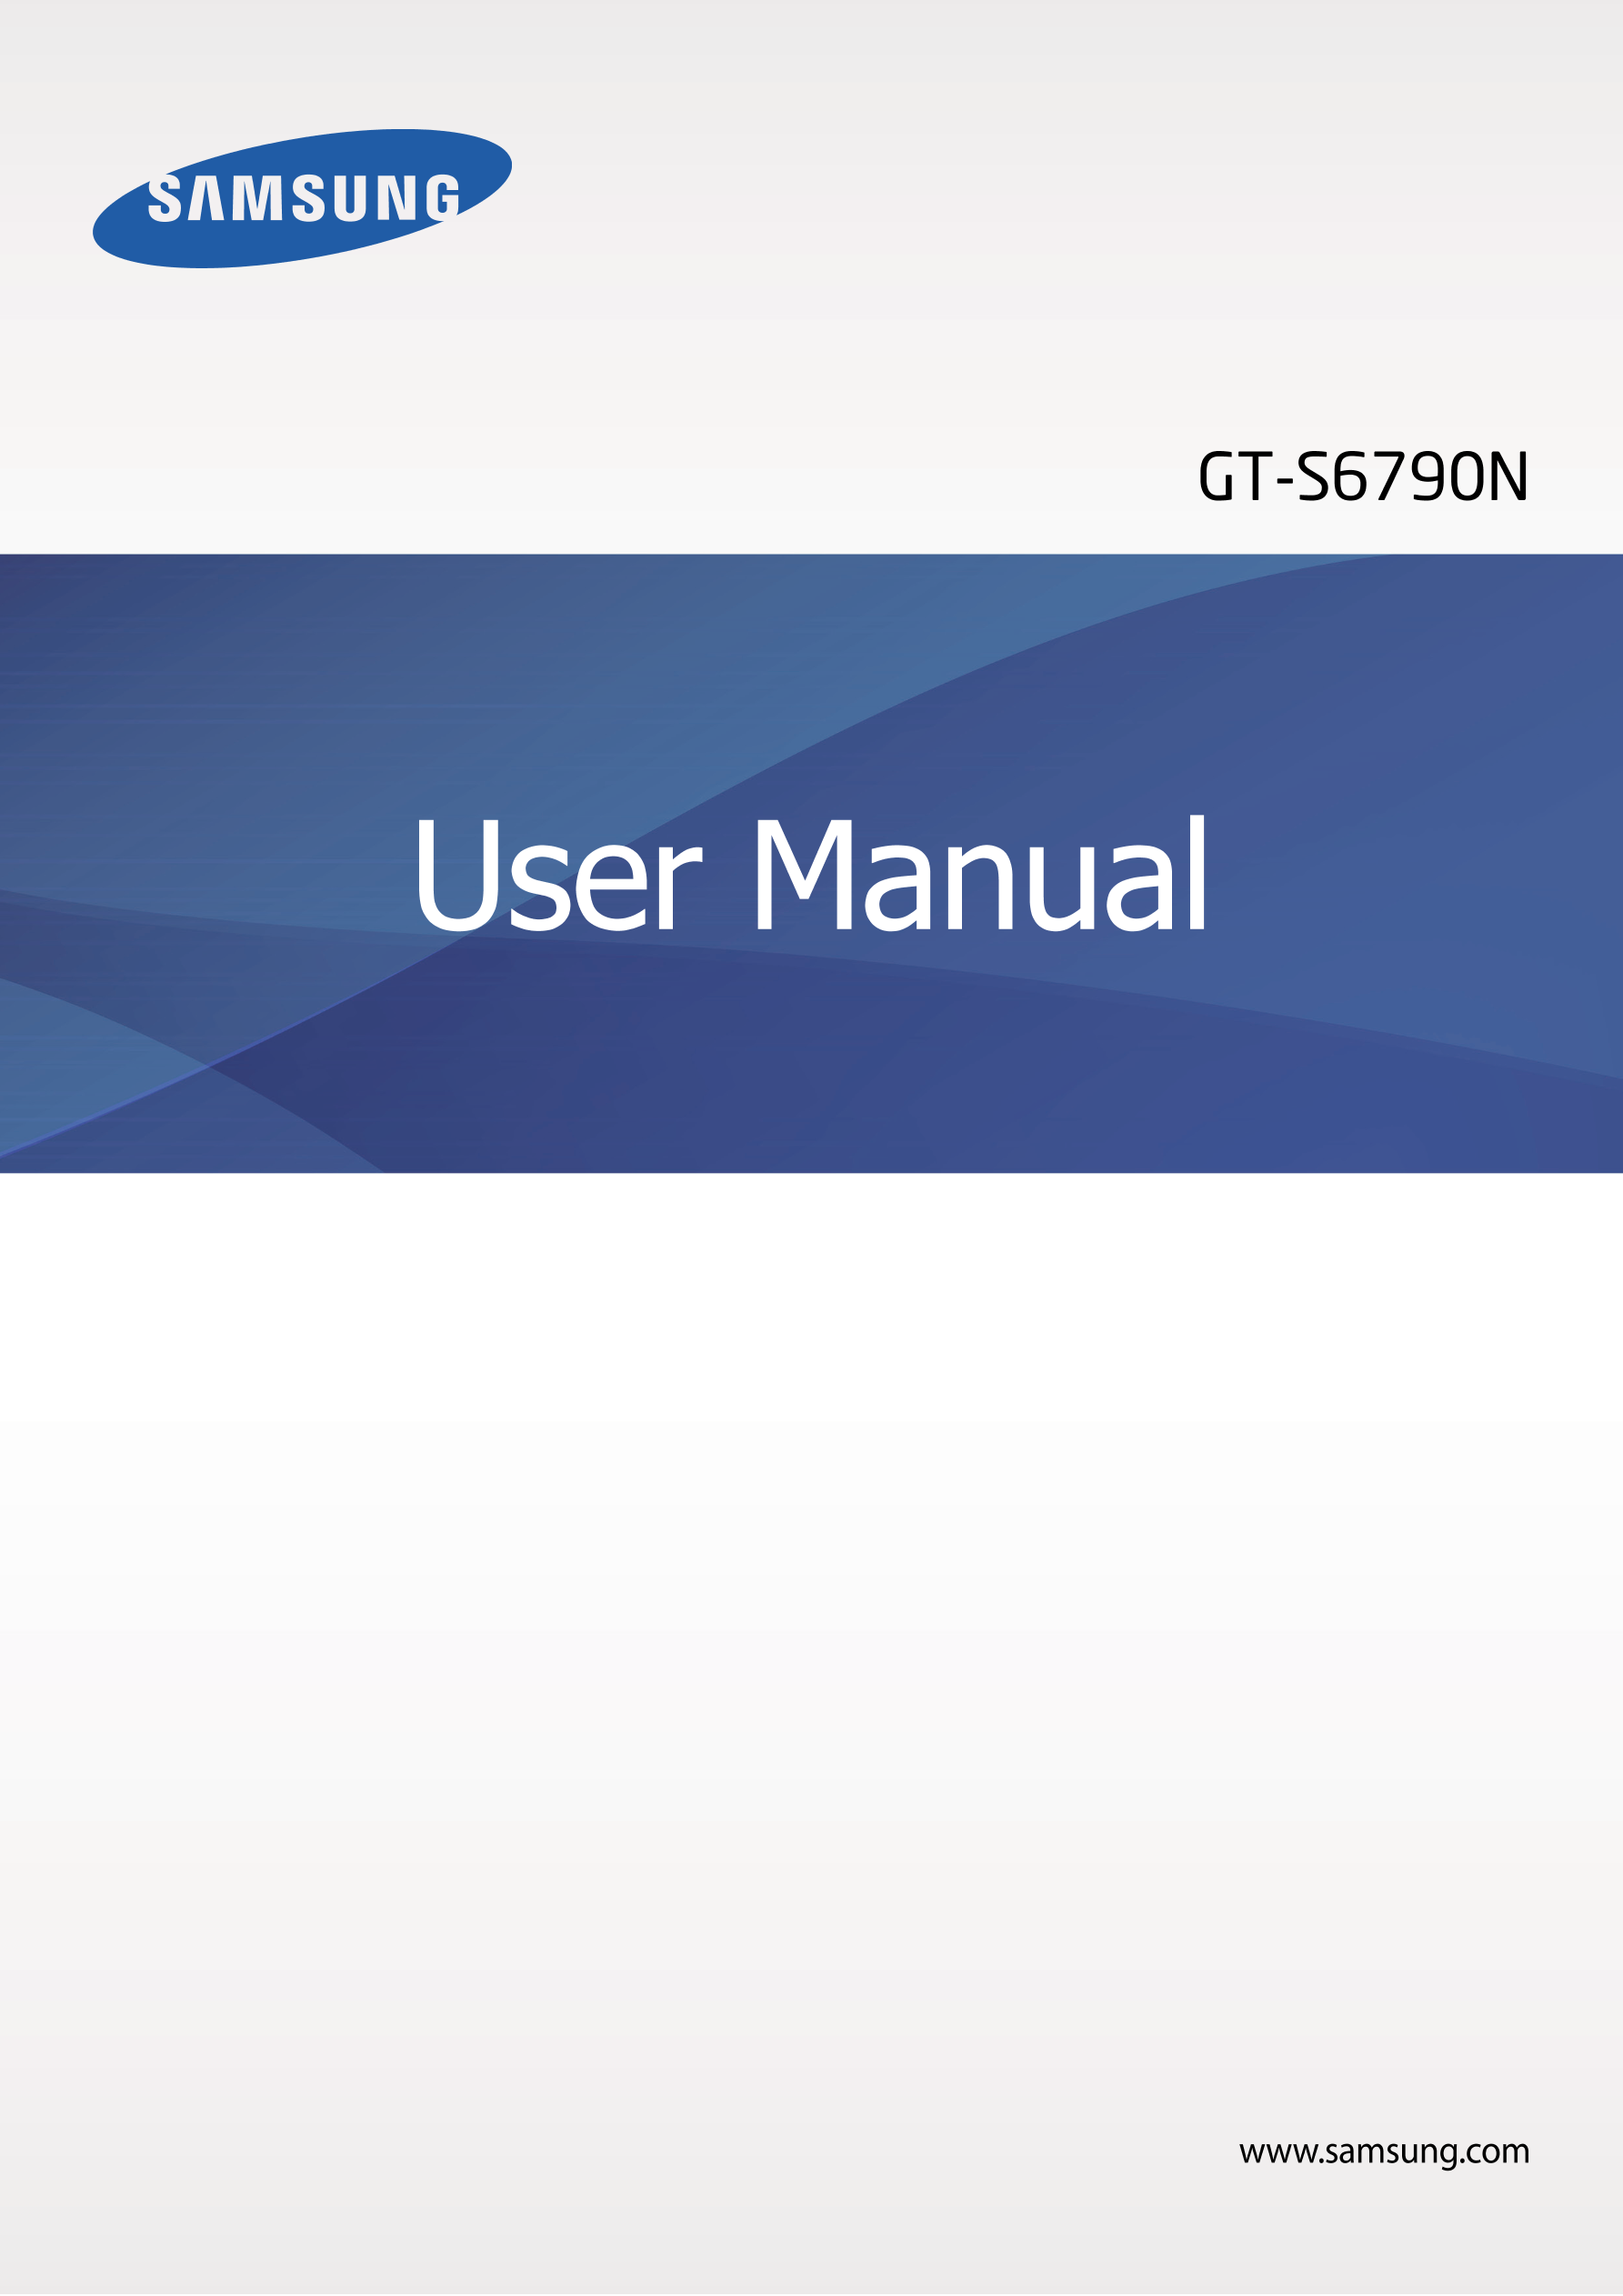 GT-S6790N
User Manual
www.samsung.com